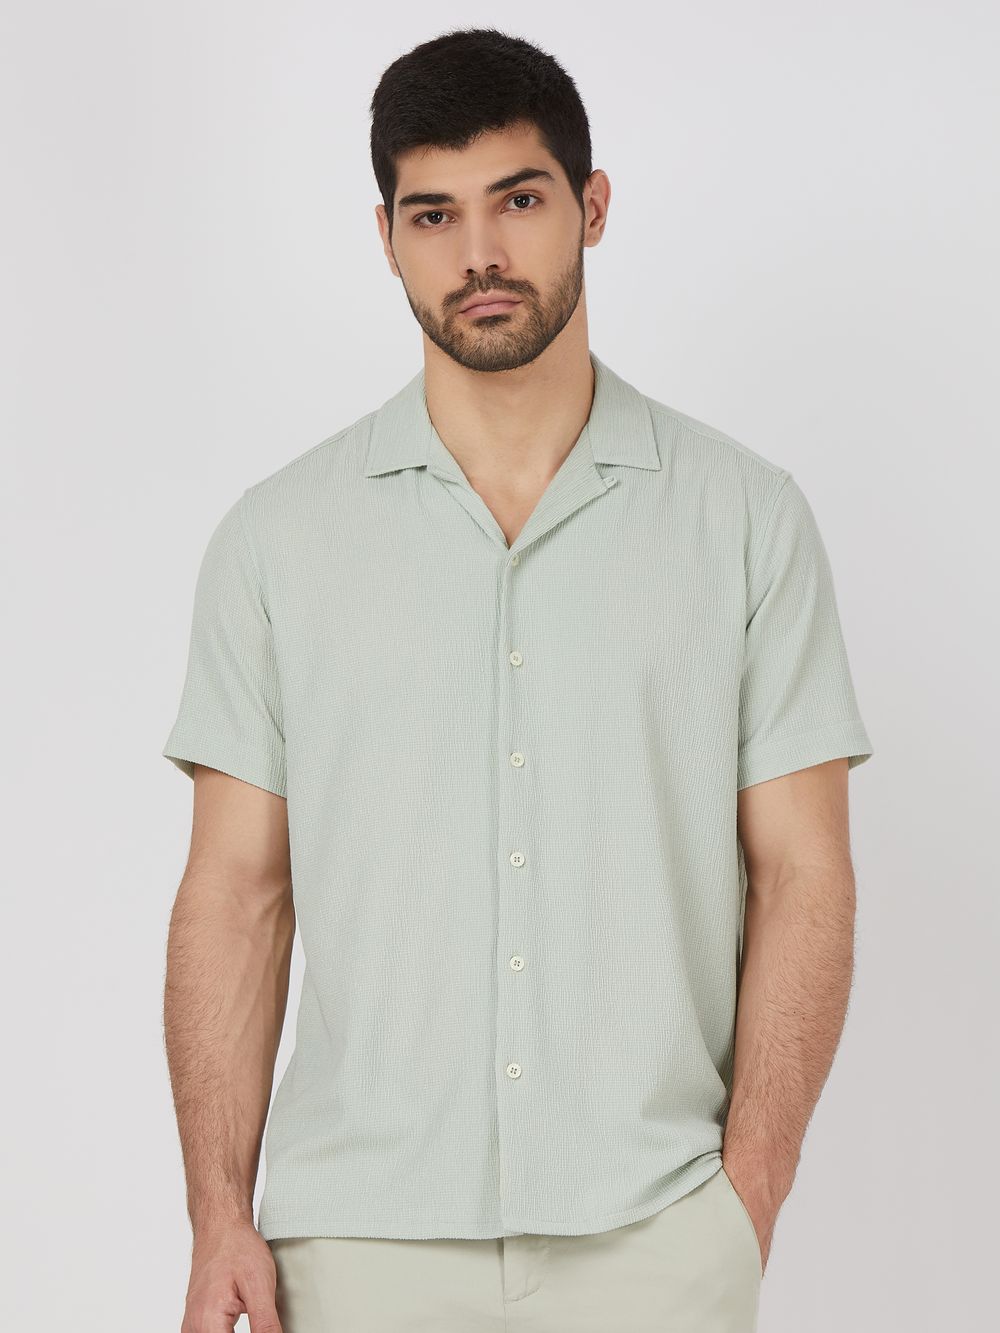 Light Green Textured Plain Relaxed Fit Casual Shirt